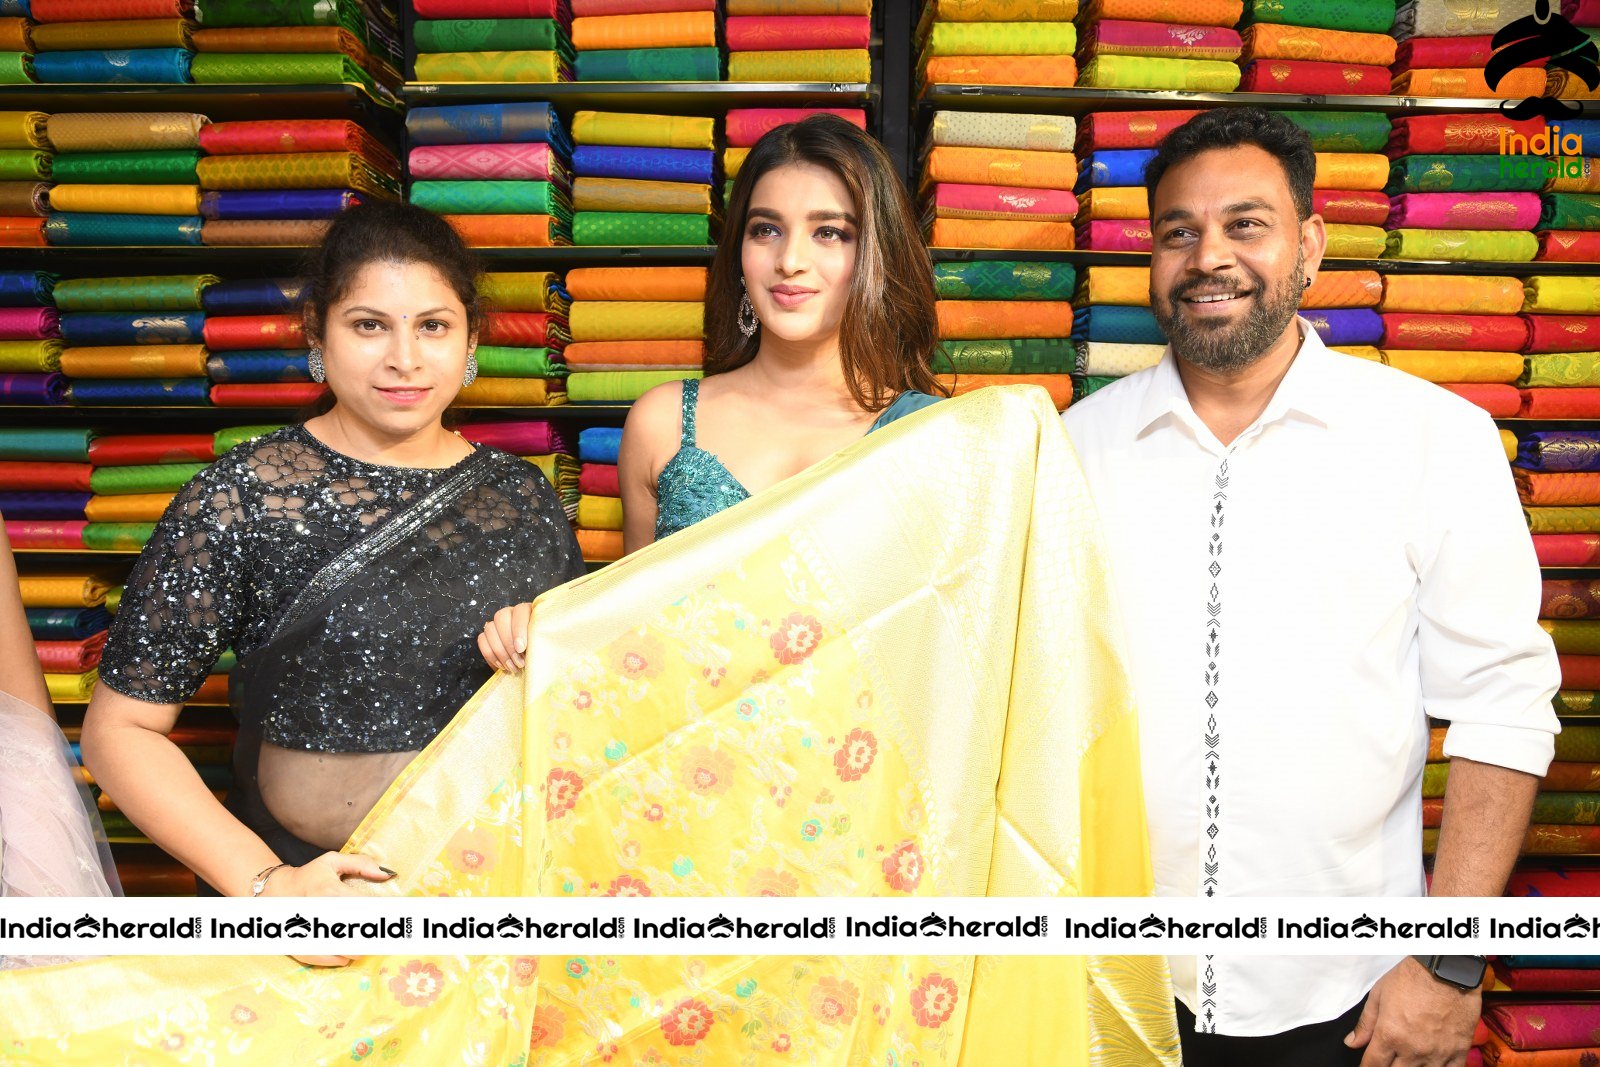 Nidhhi Agerwal launch KLM Shopping mall at Secunderabad Set 5